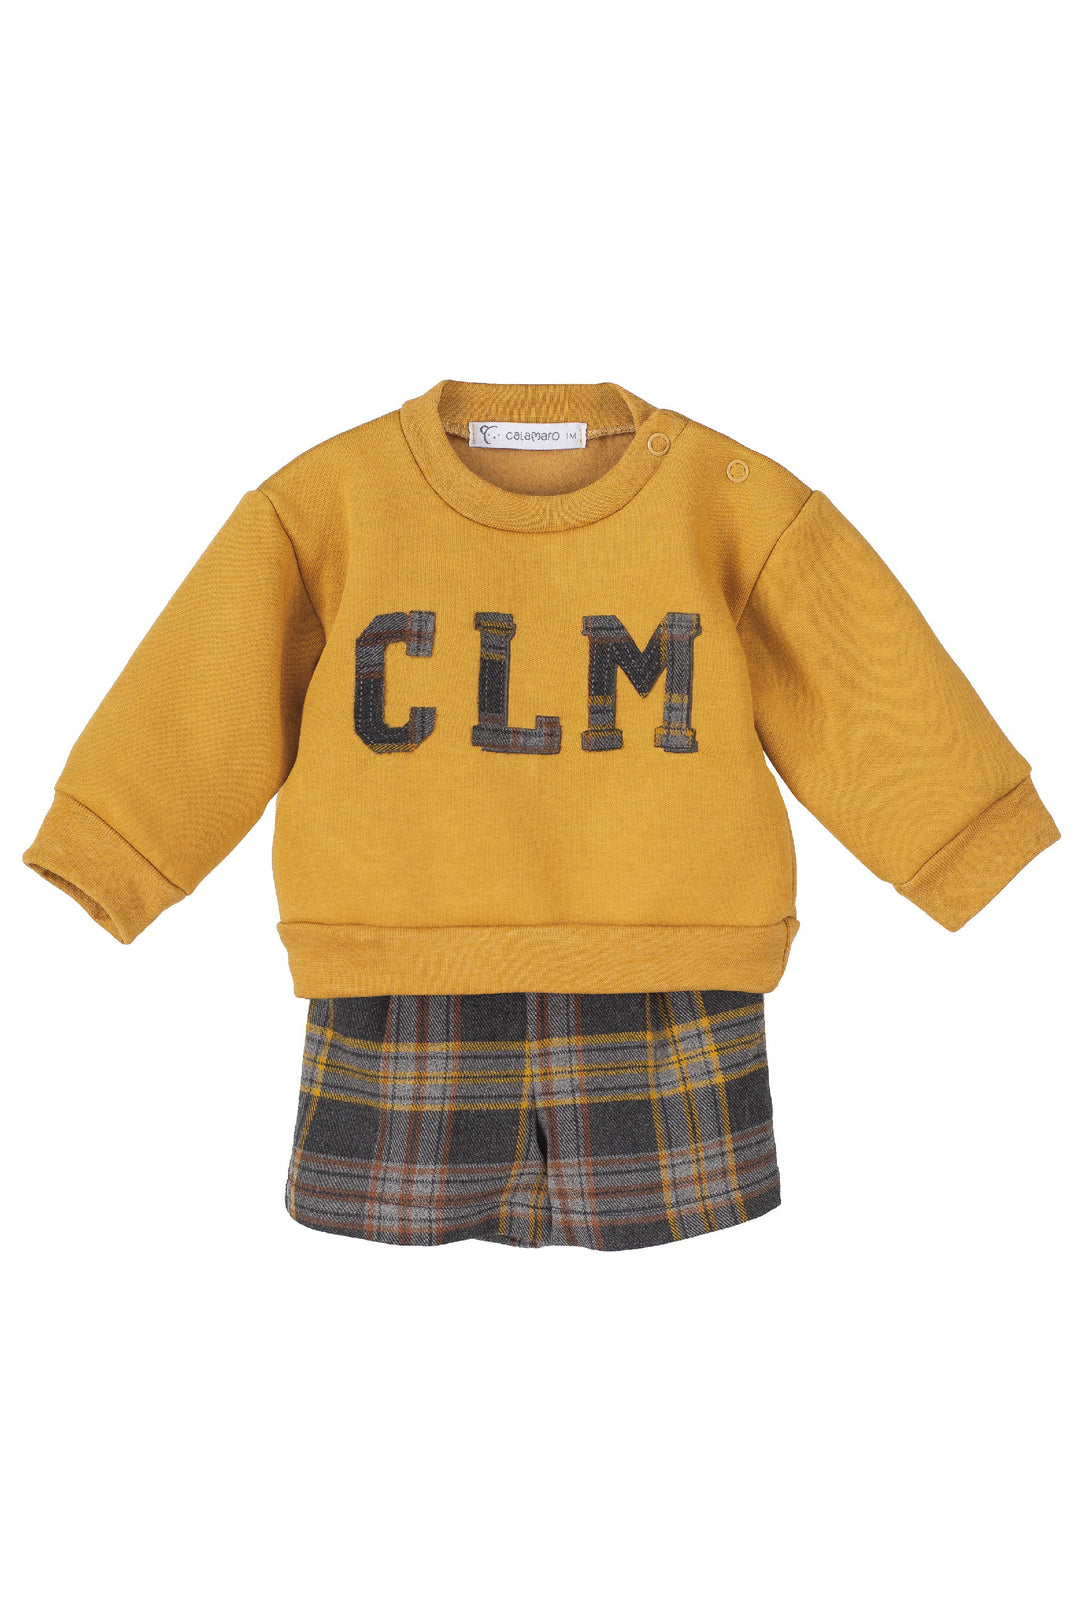 Calamaro "Sonny" Mustard Varsity Sweatshirt & Tartan Shorts | Millie and John